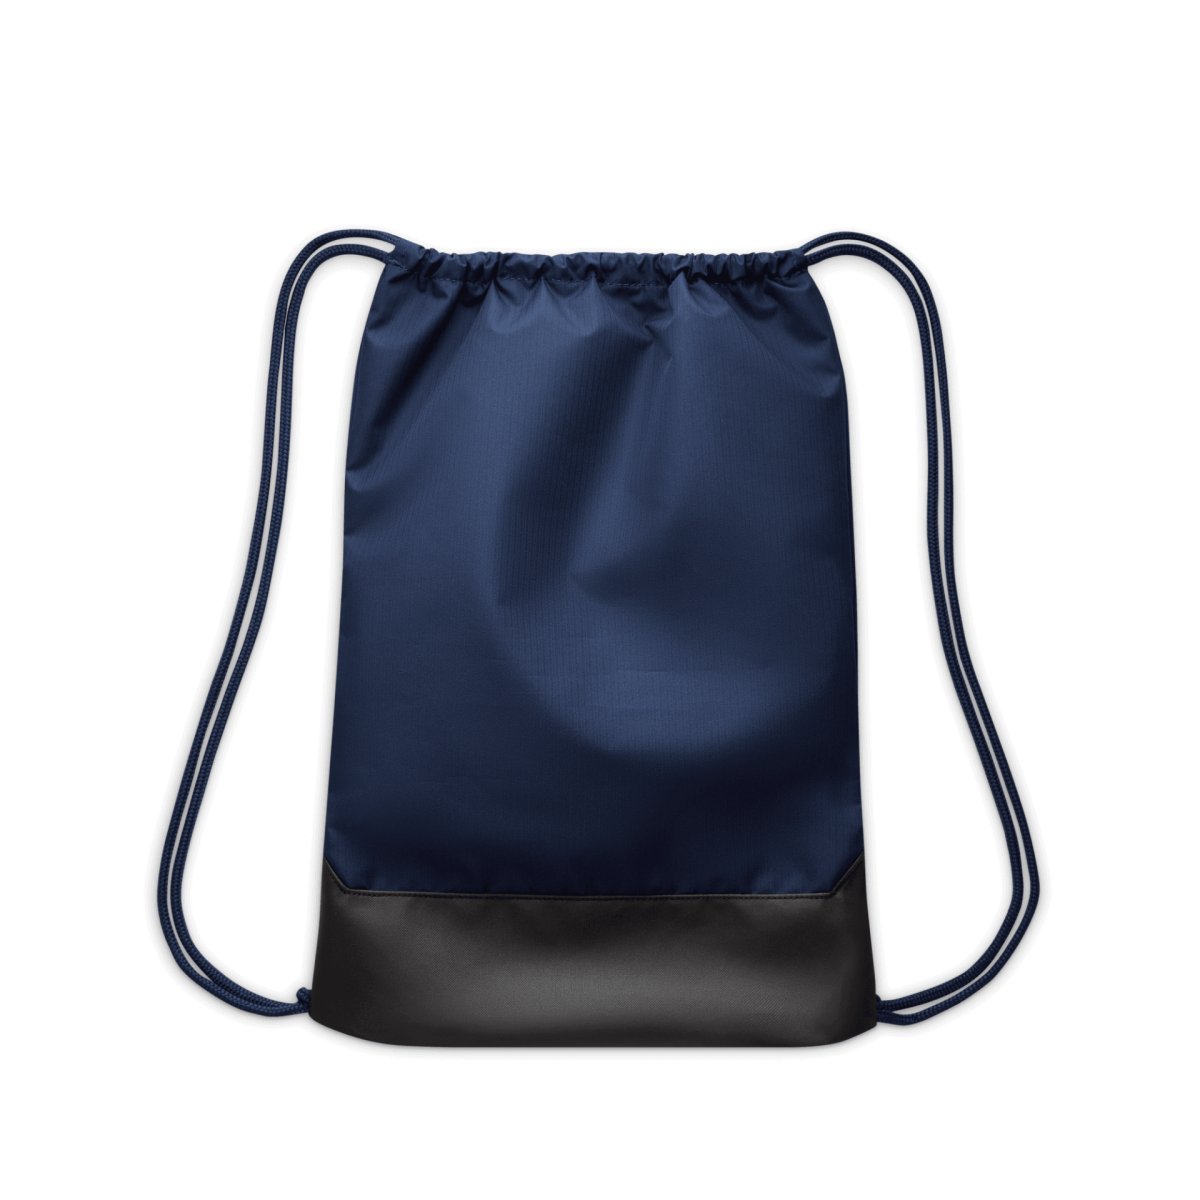 Nike Brasilia Gymsack 9.0 navy blue Sack - Backpacks, Bags, Sacks ...